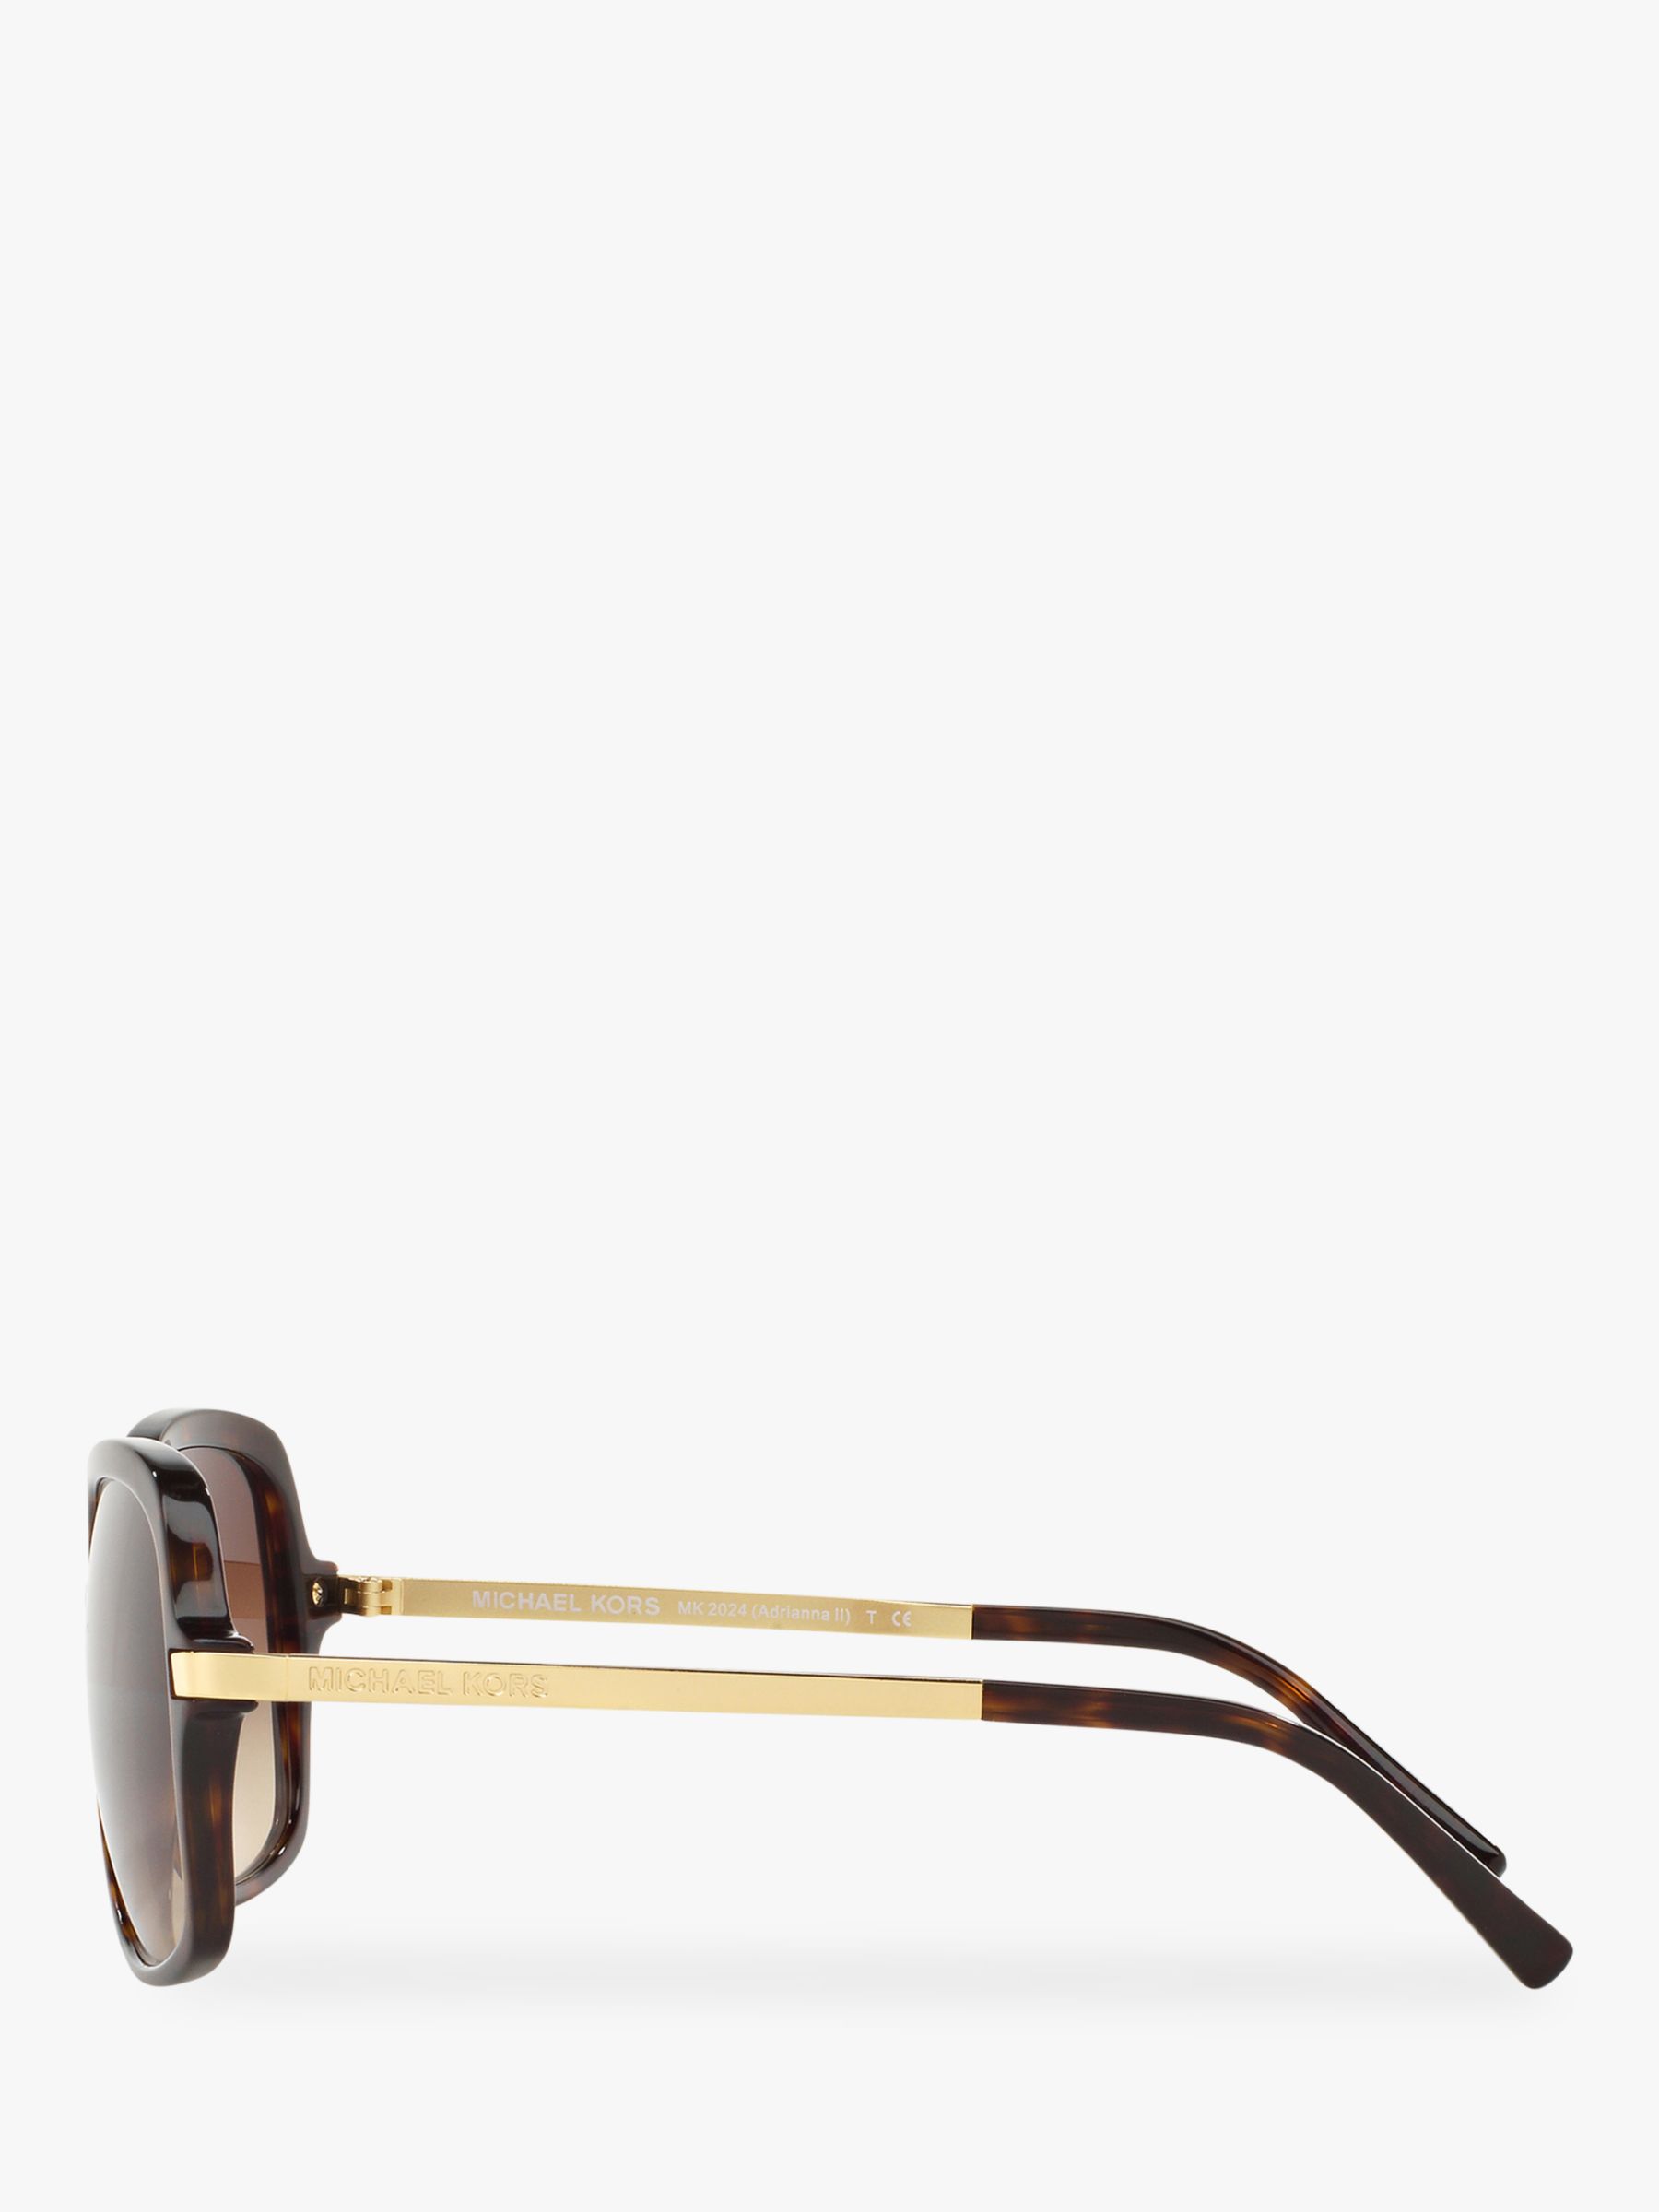 Buy Michael Kors MK2024 Women's Adrianna II Square Sunglasses Online at johnlewis.com